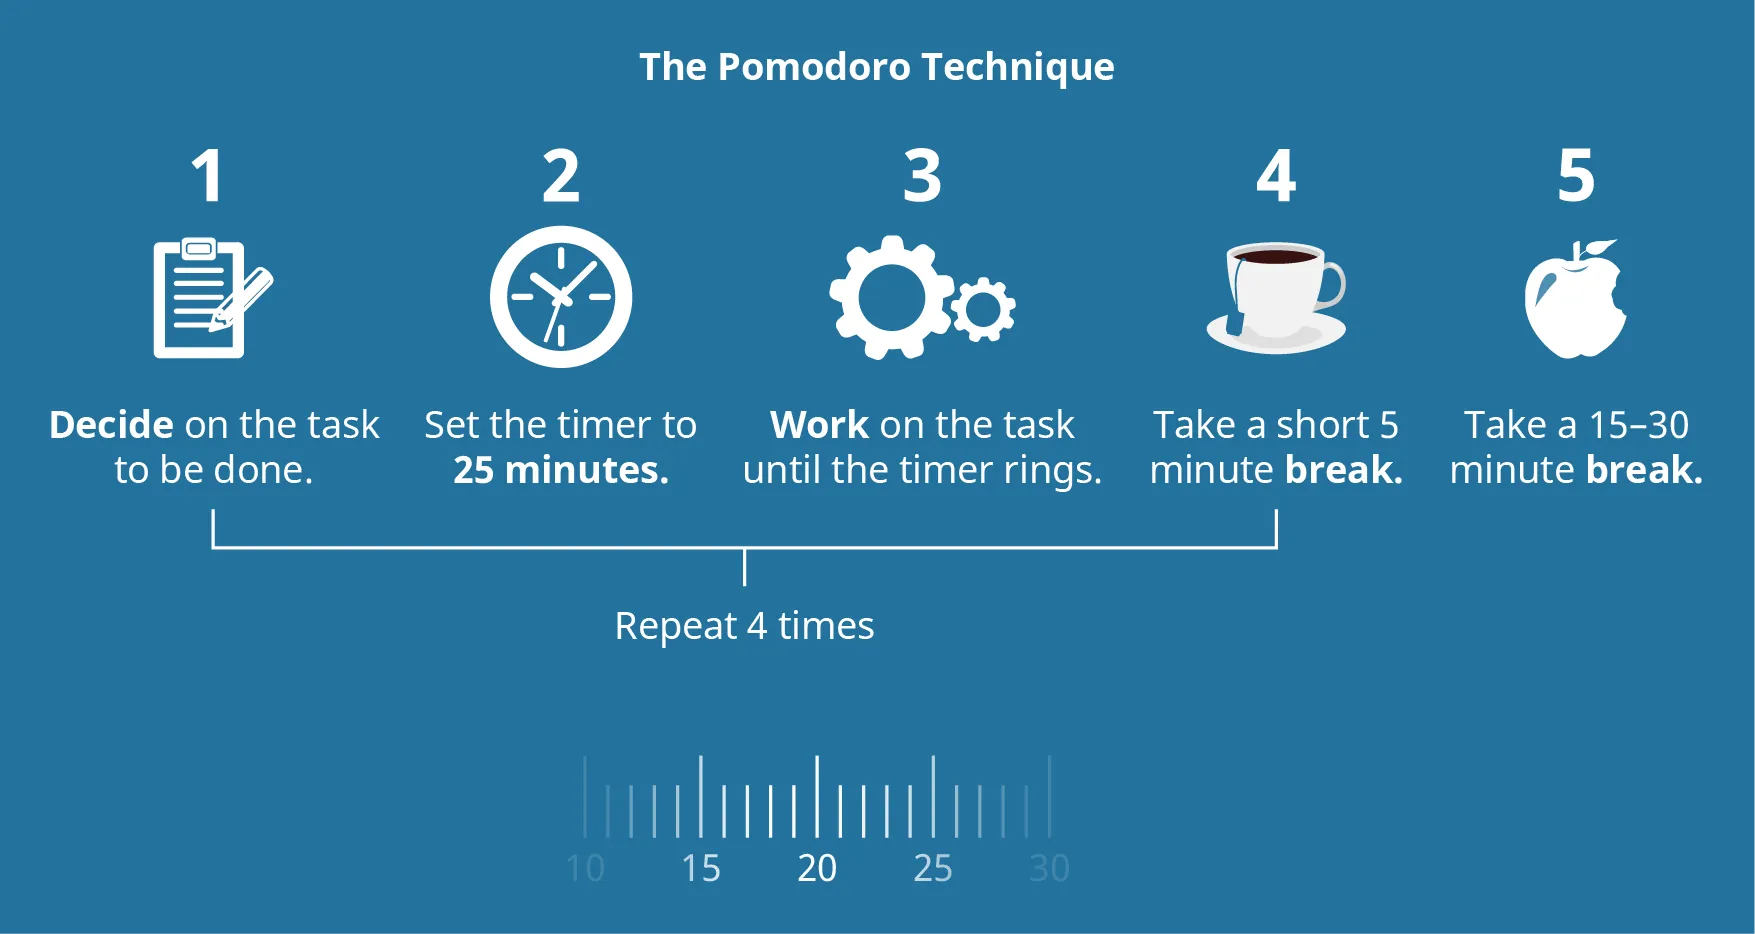 The Pomodoro technique is illustrated.